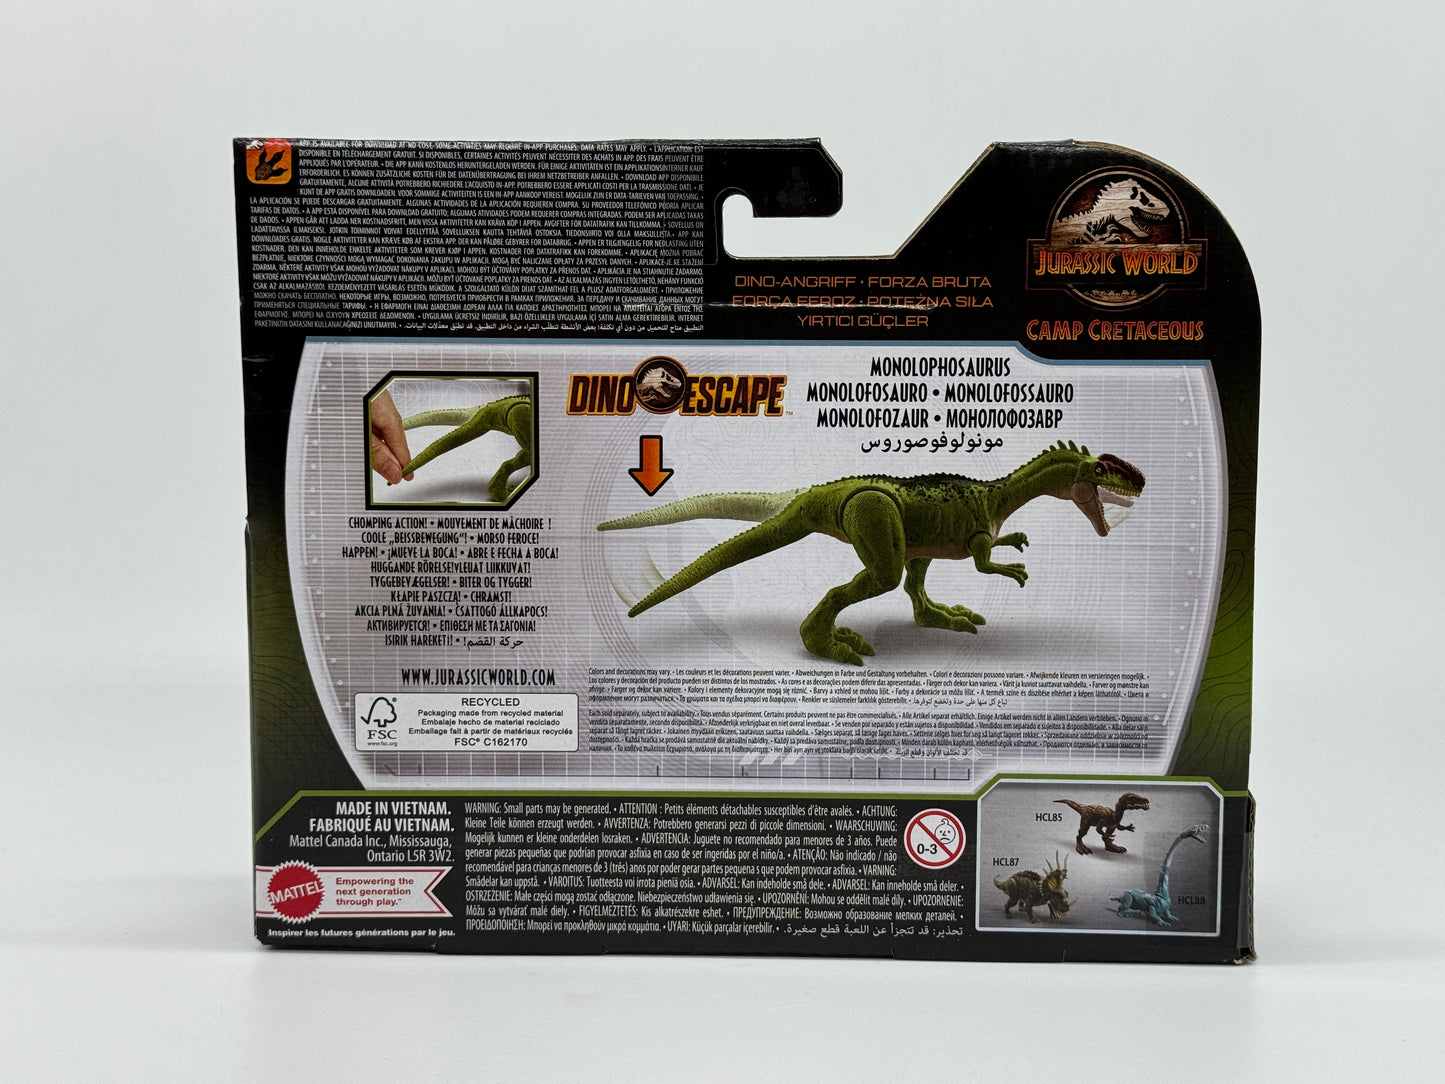 Jurassic World Camp Cretaceous "Monolophosaurus" Dino Escape Fierce Force Netflix